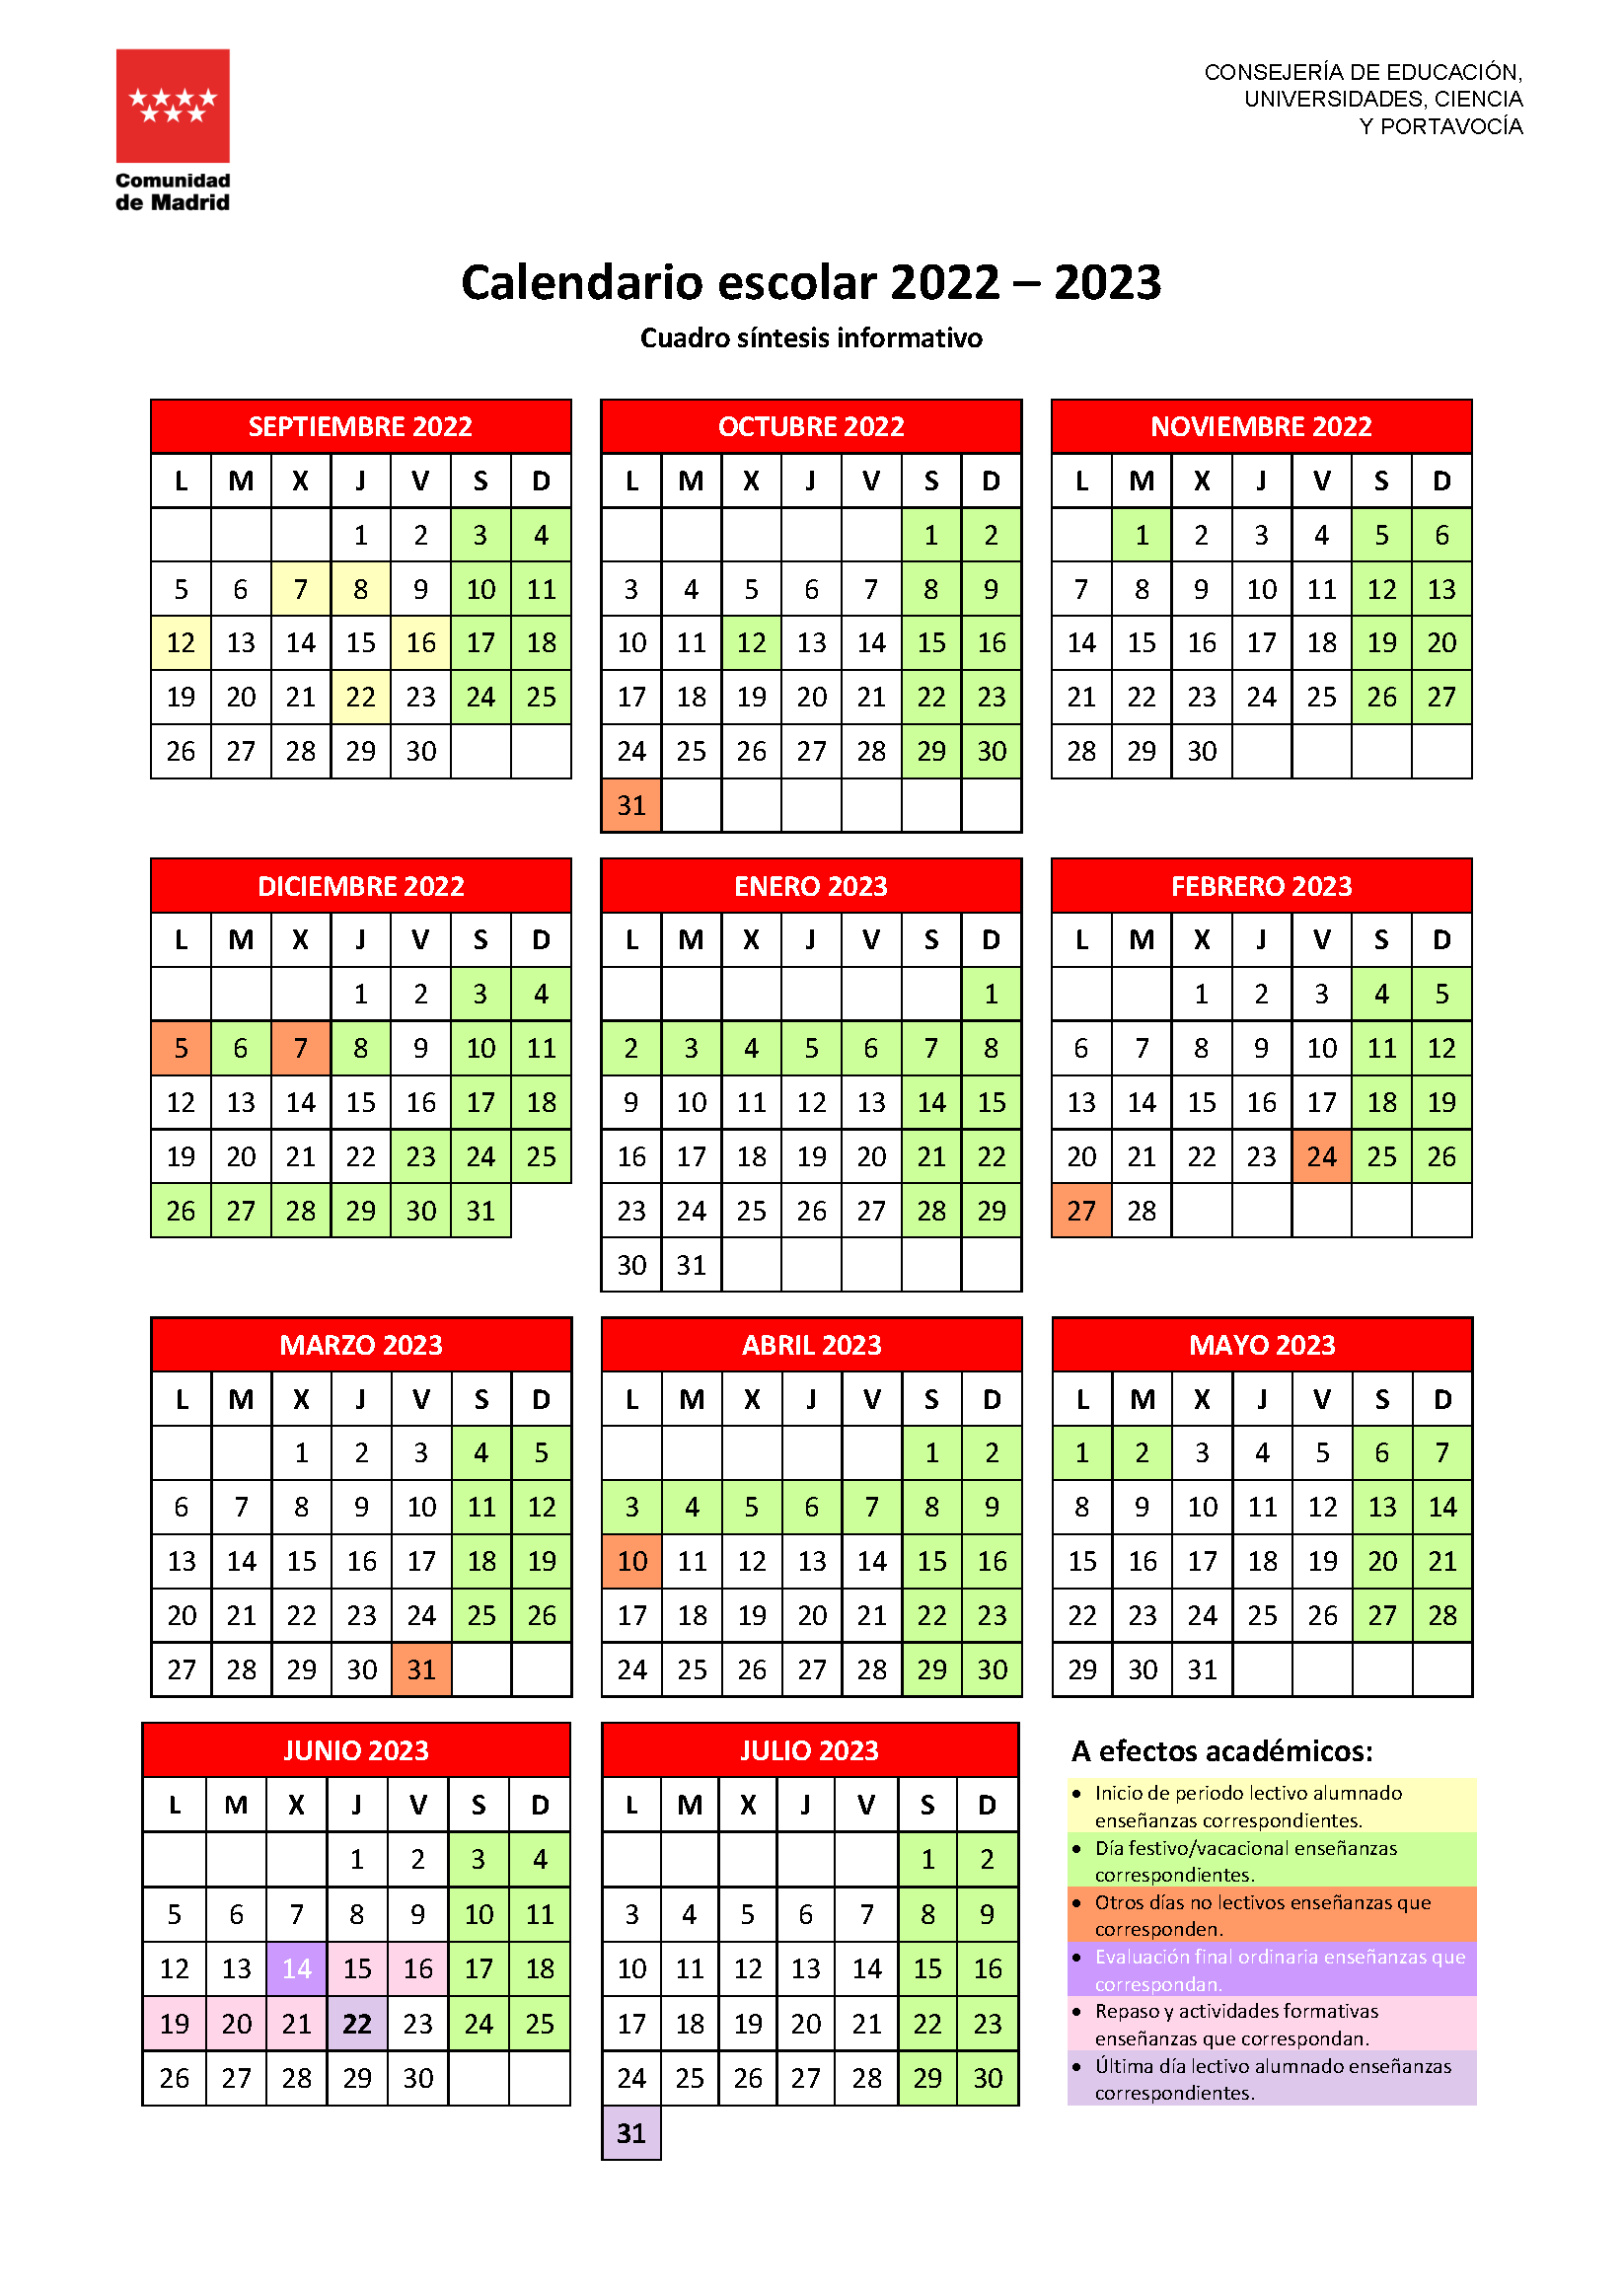 Calendario escolar del curso 2022-23